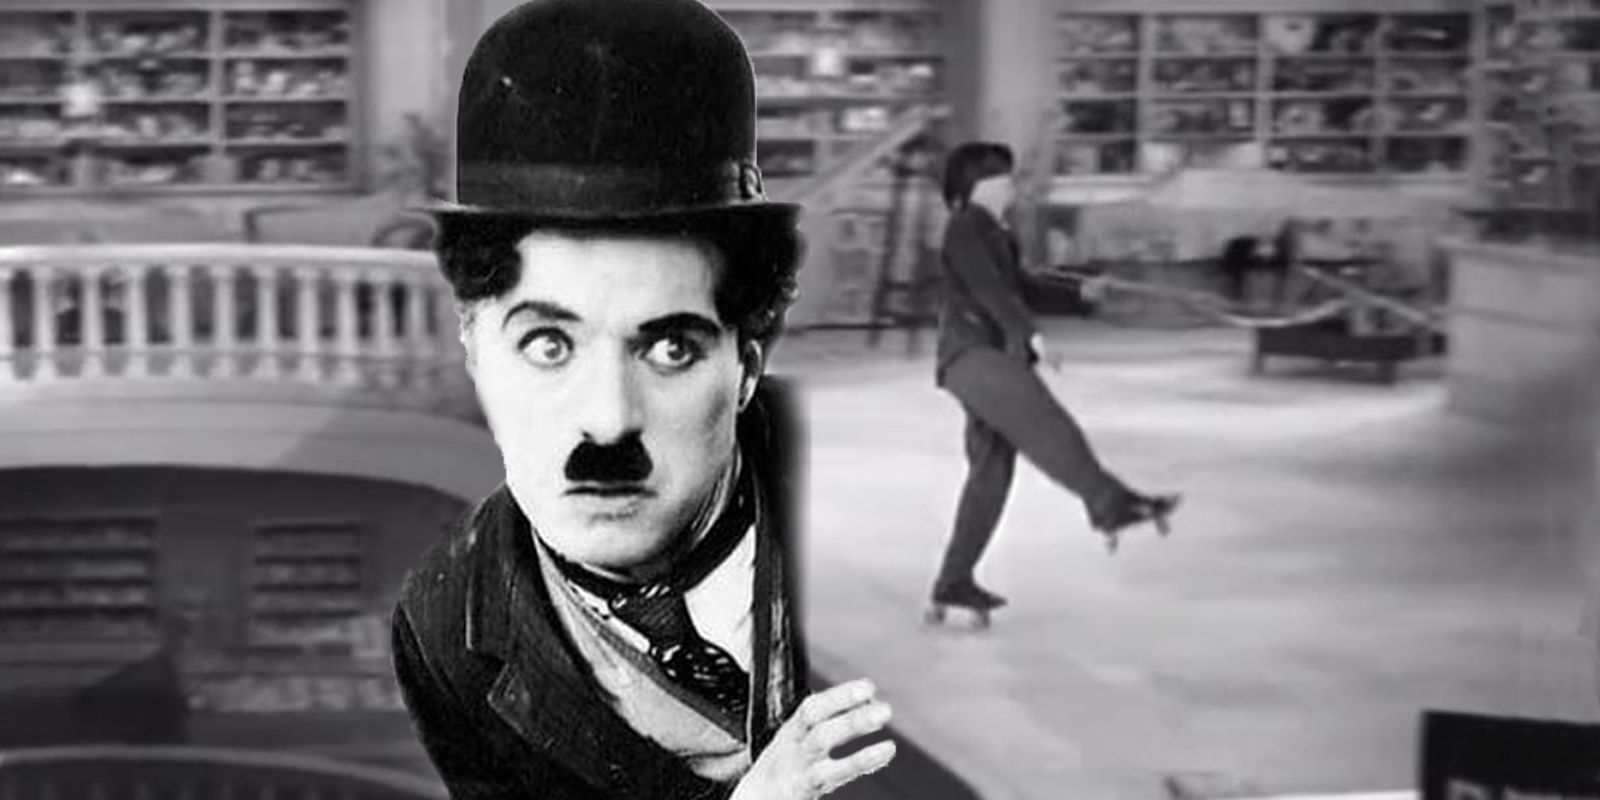 Charlie Chaplin as the Tramp